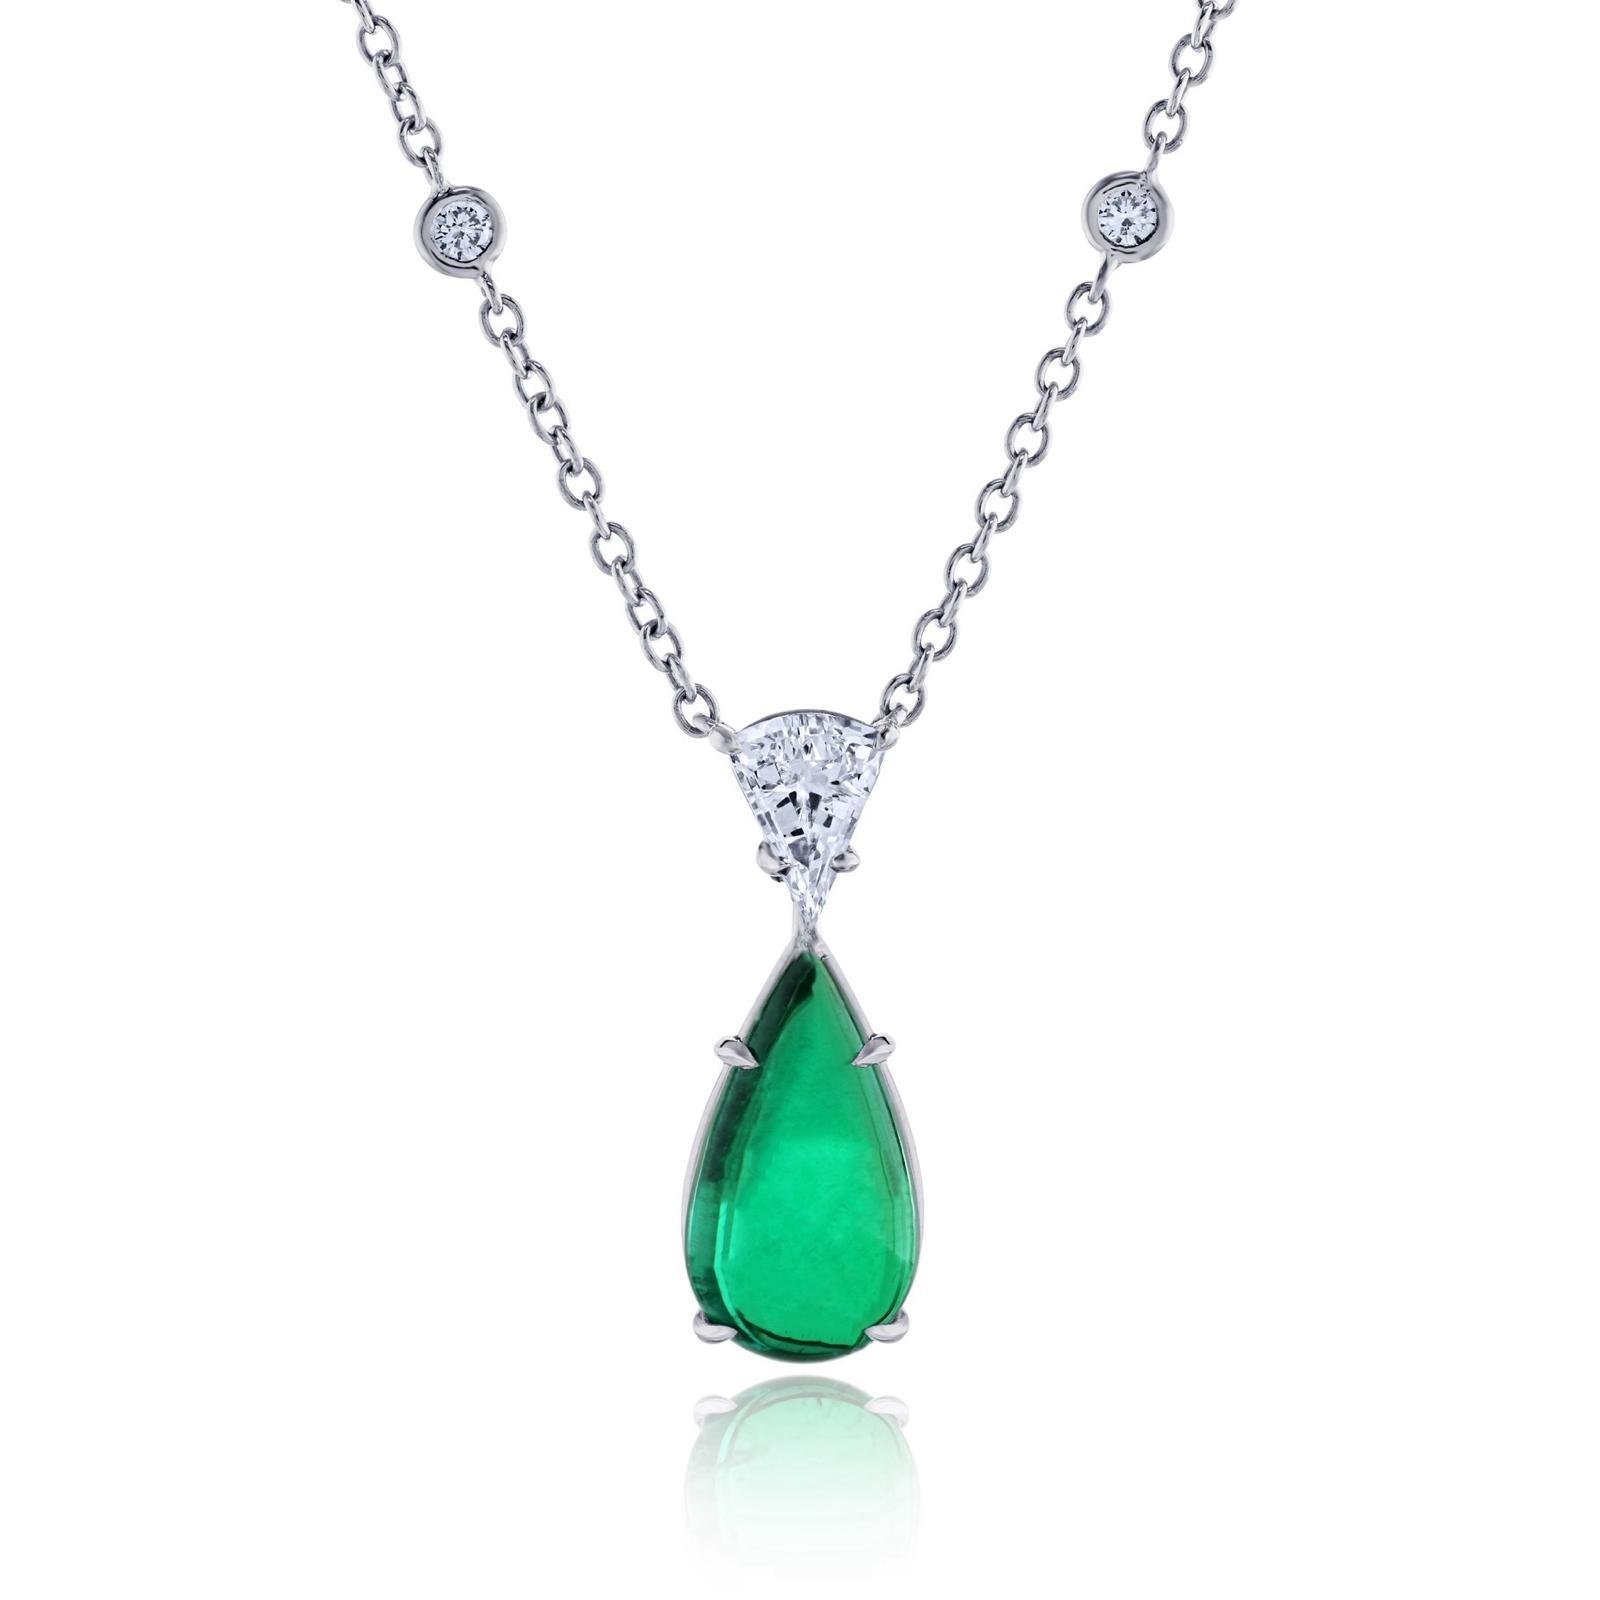 David Gross Necklace 3.89 carat Cabochon Green Emerald